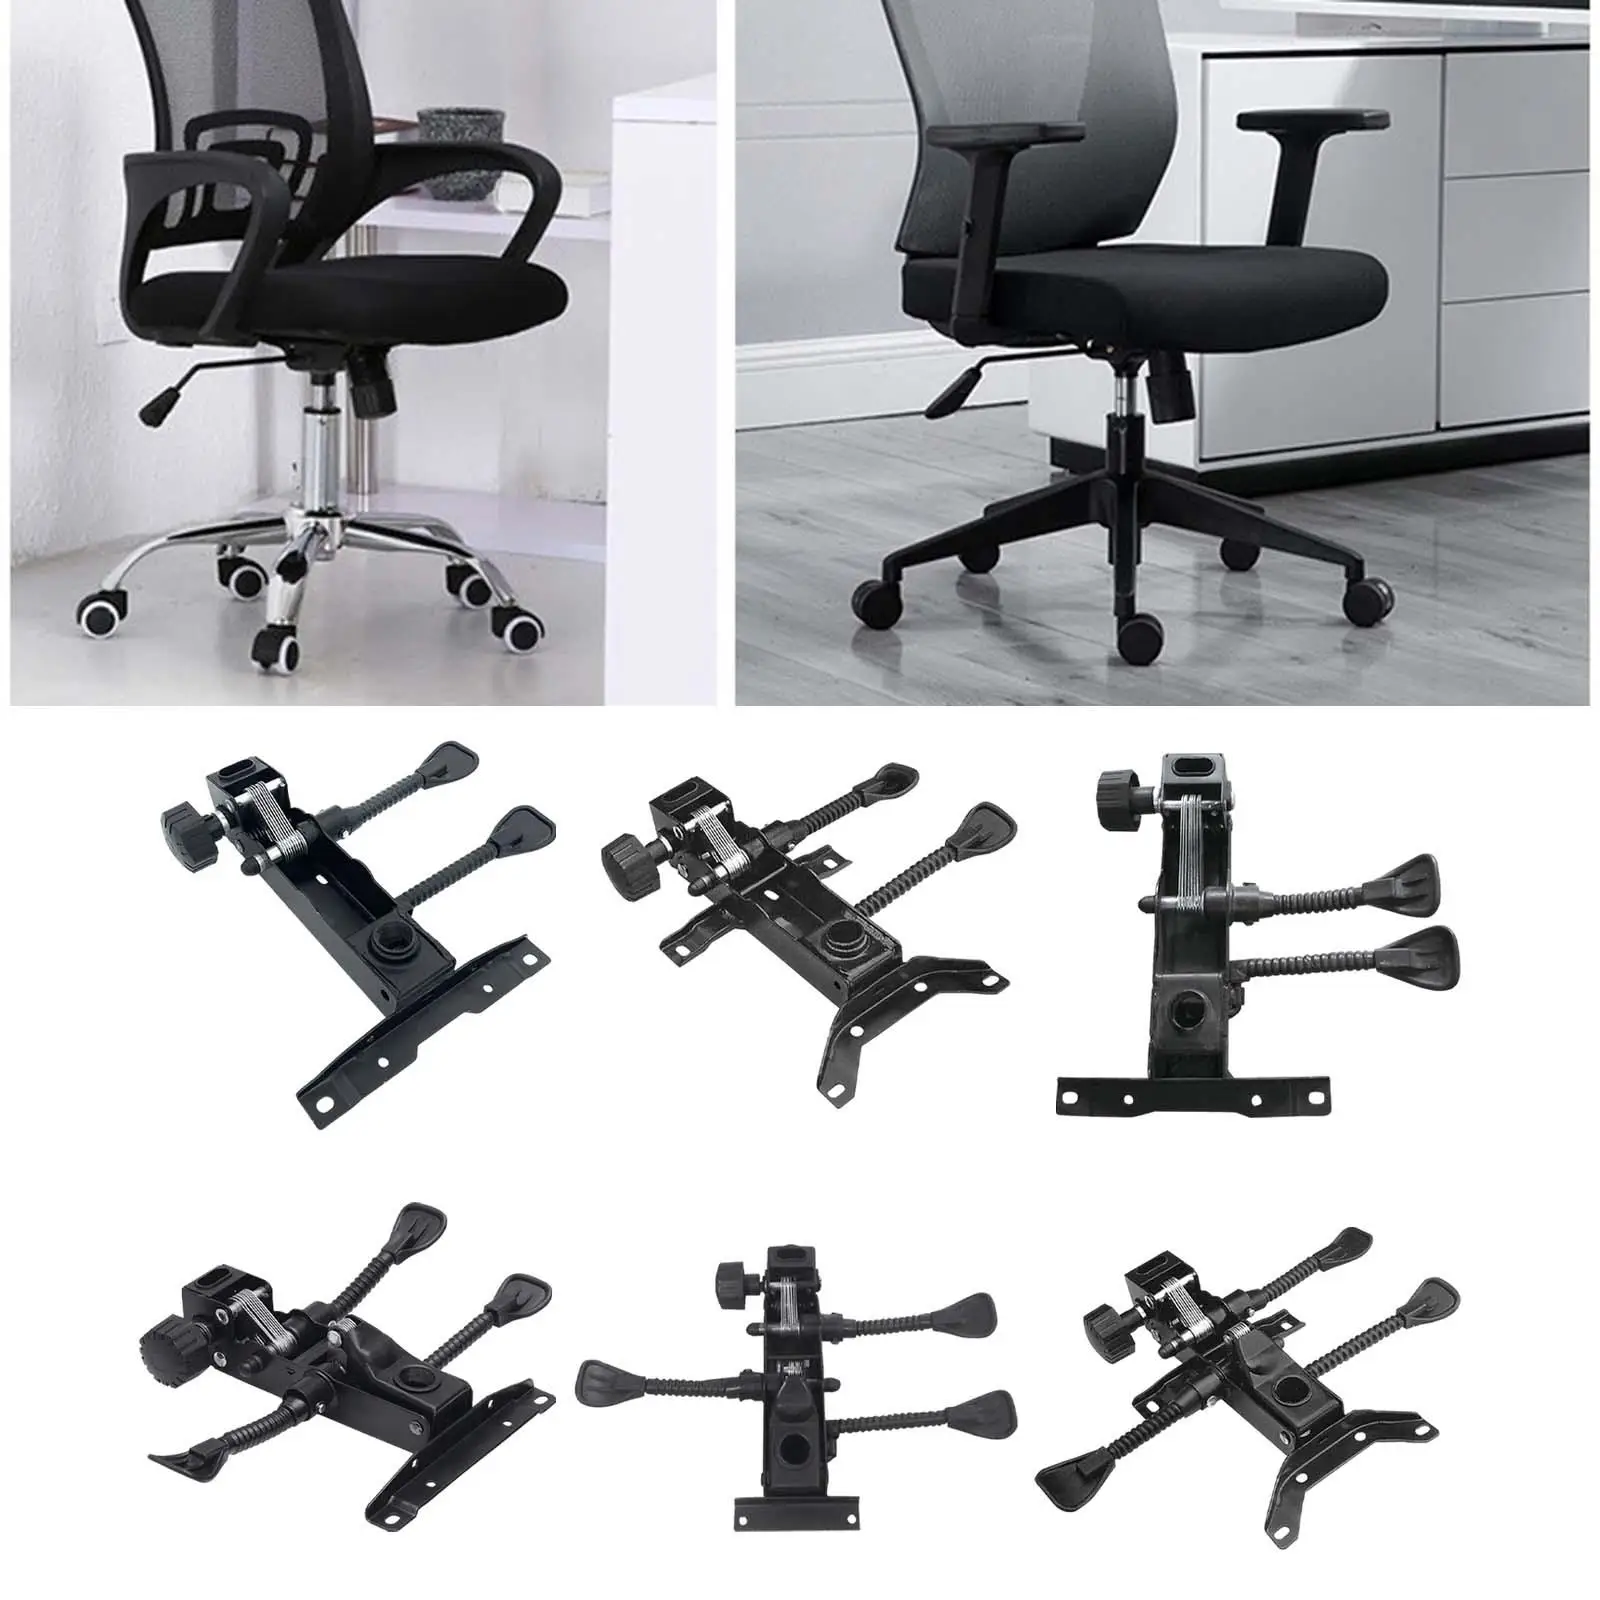 Swivel Tilt Control Seat Mechanism Office Chair Tilt Control Mechanism for Office Chairs Gaming Chairs Mesh Chair Desk Chairs